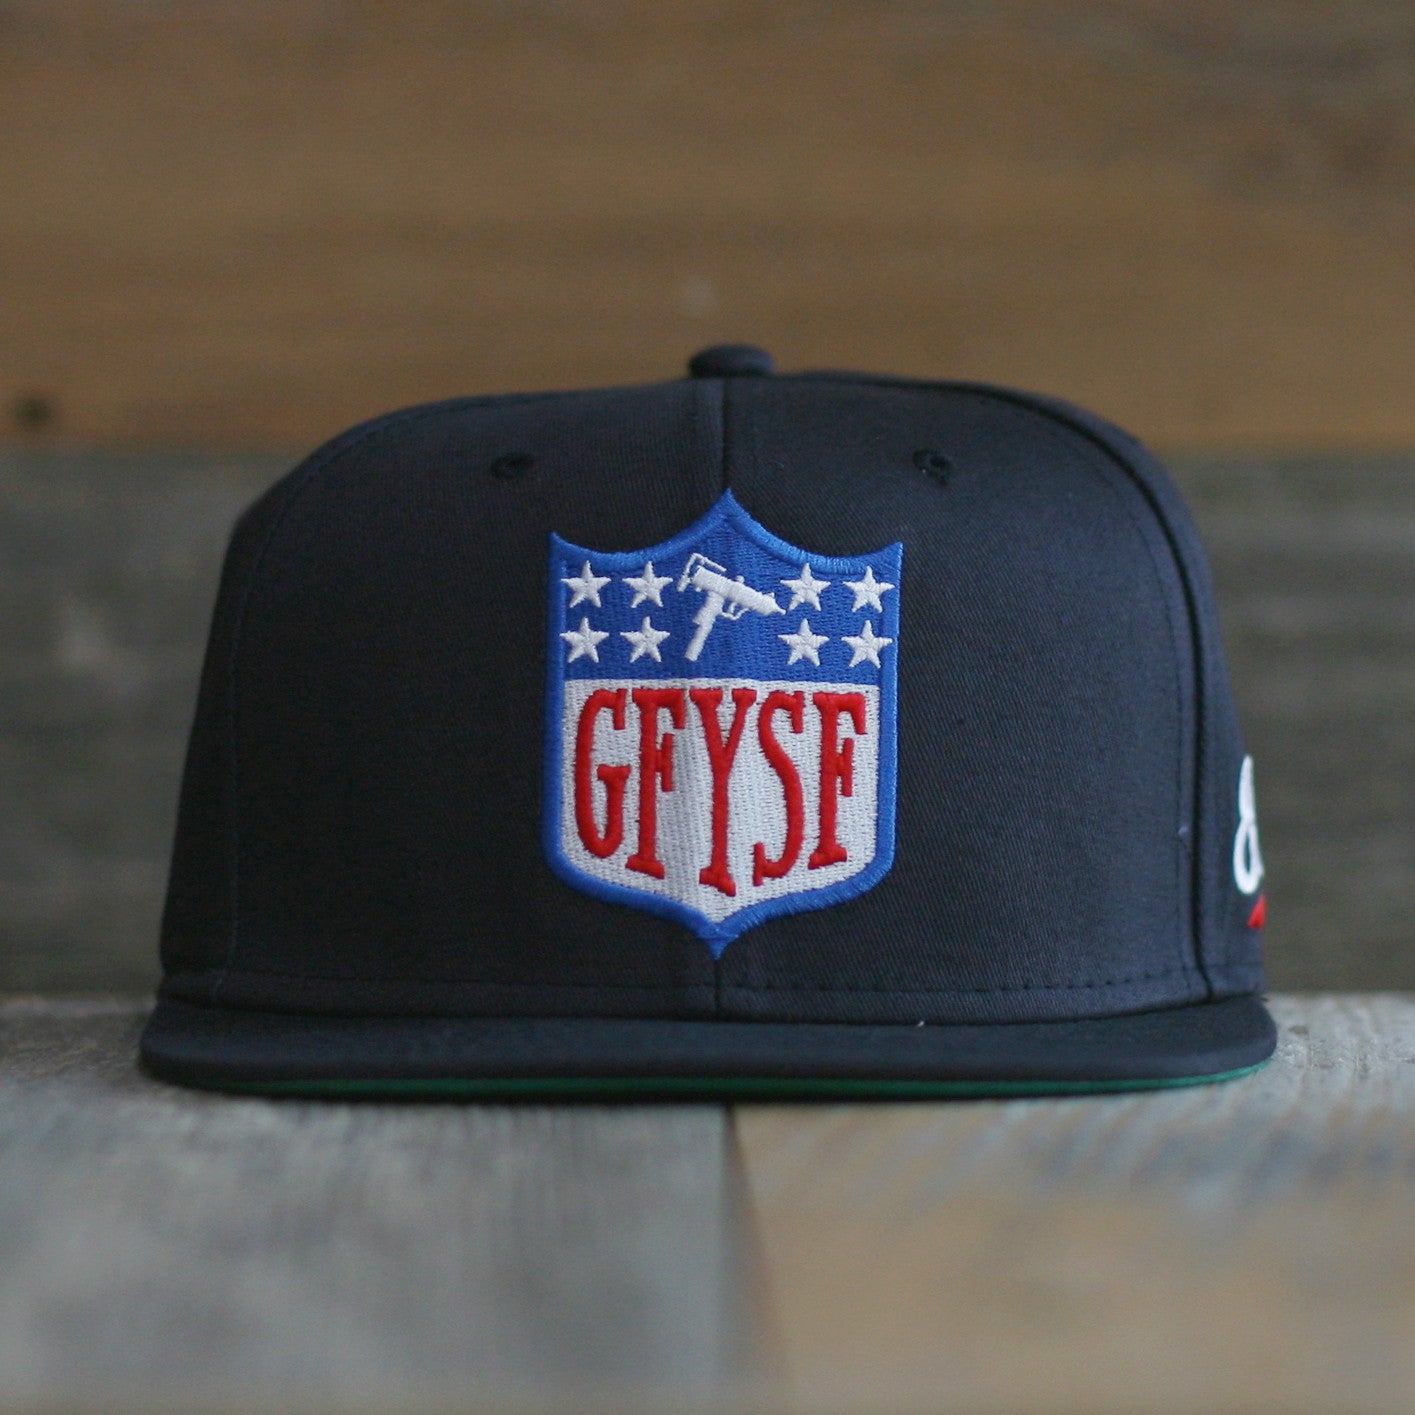 GFYSF League Snapback Hat Navy